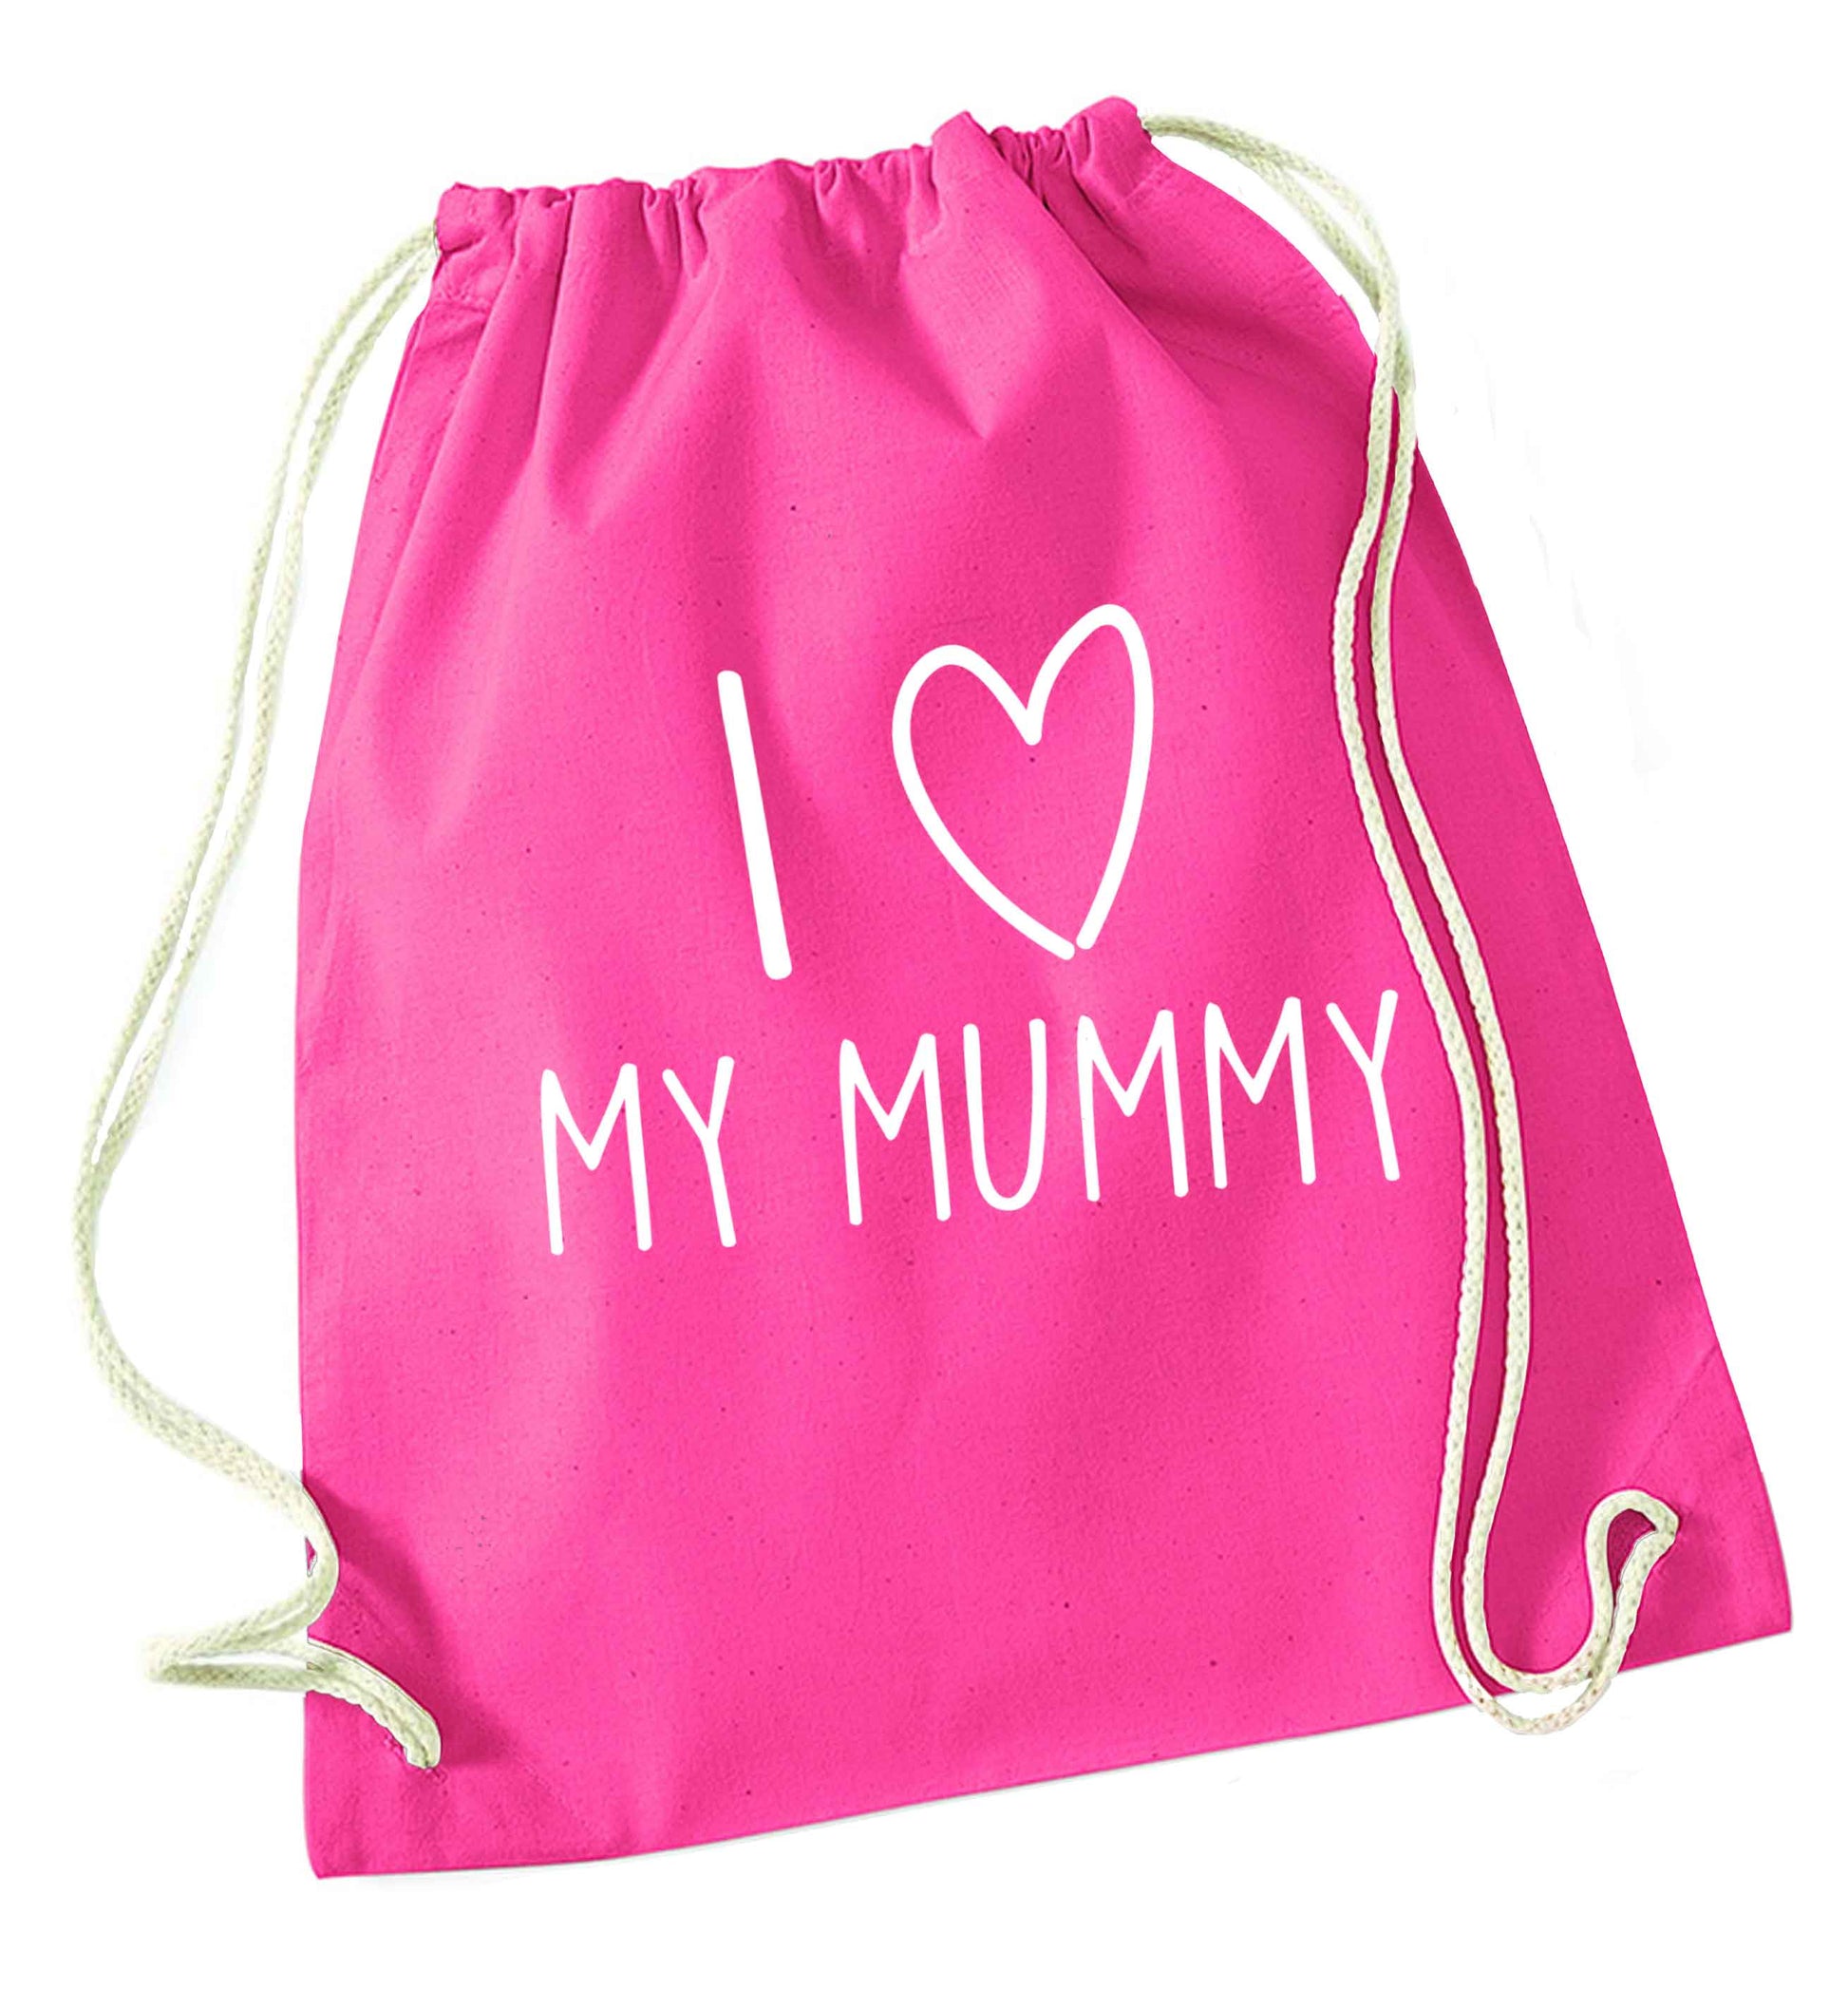 I love my mummy pink drawstring bag